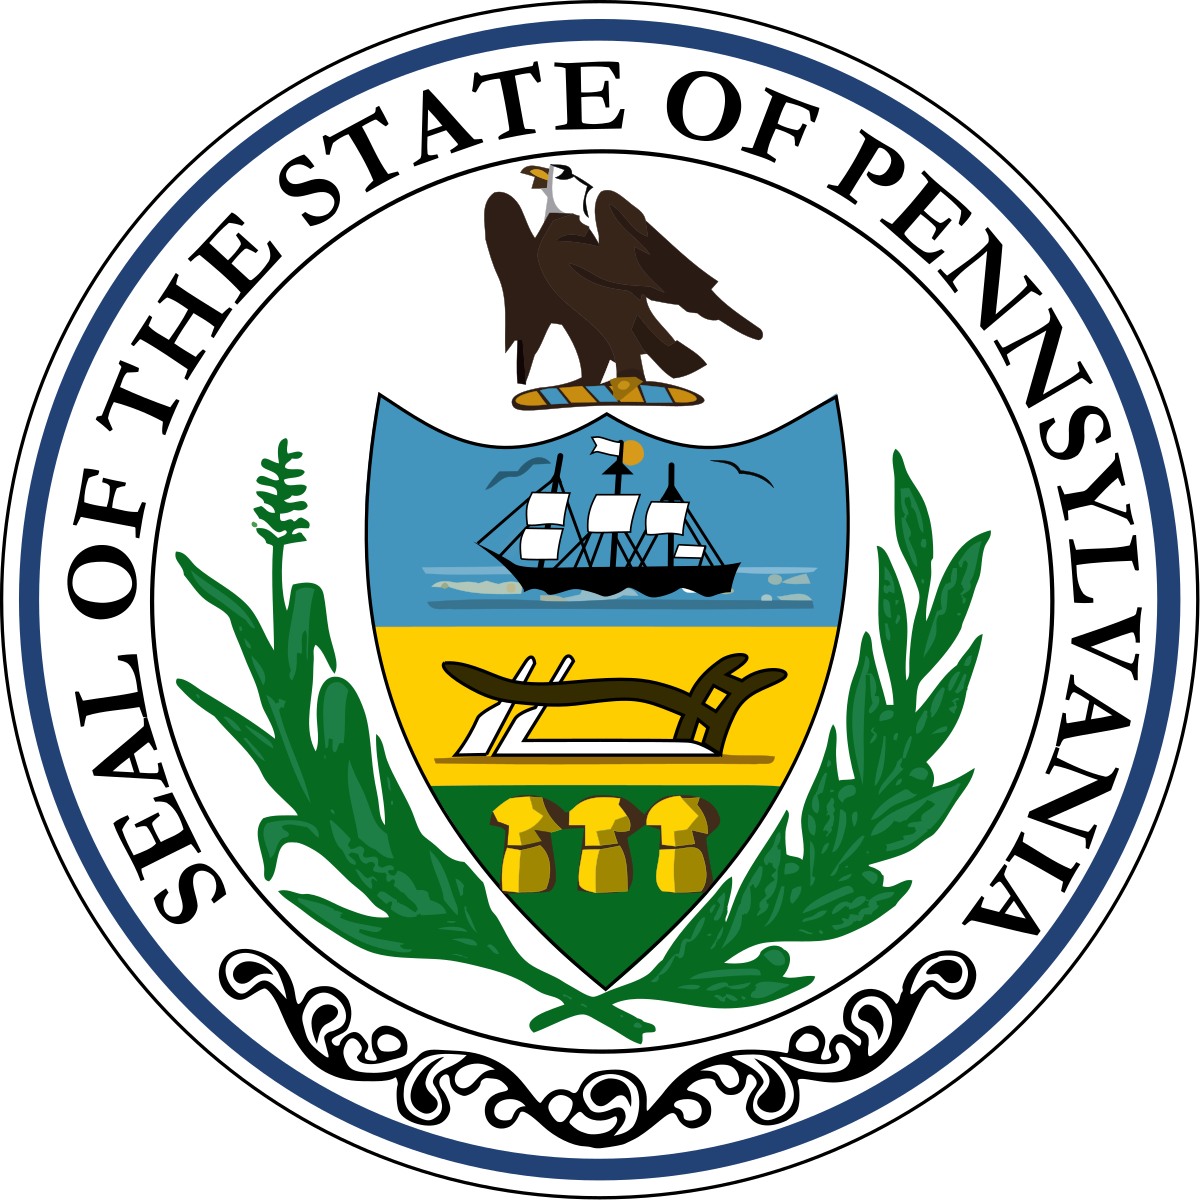 Pennsylvania General Assembly